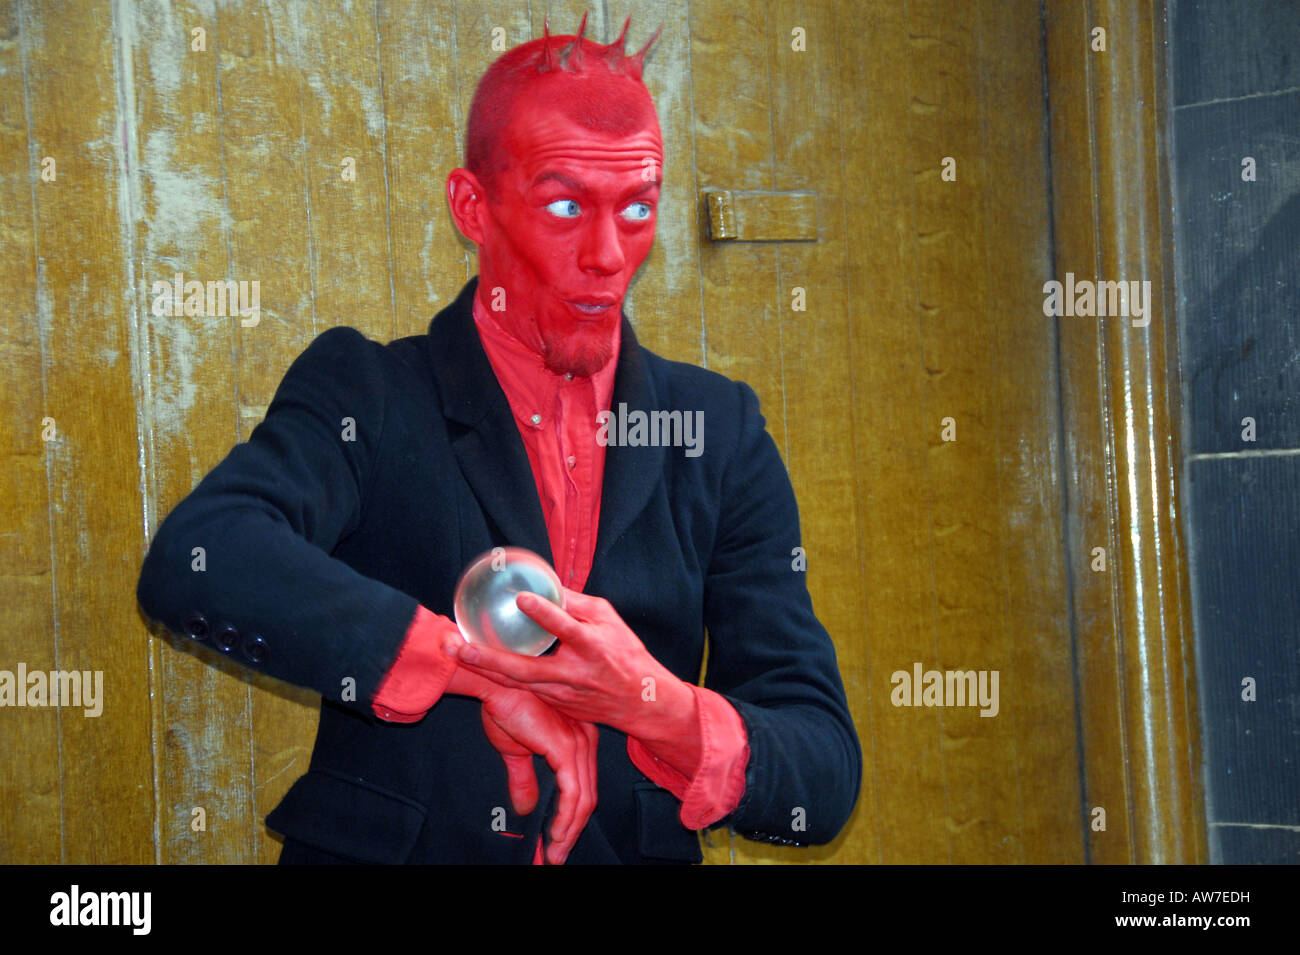 Crystal Ball street artist performing crystal ball / sphere manipulation act dressed as devil at Edinburgh Fringe Festival Stock Photo